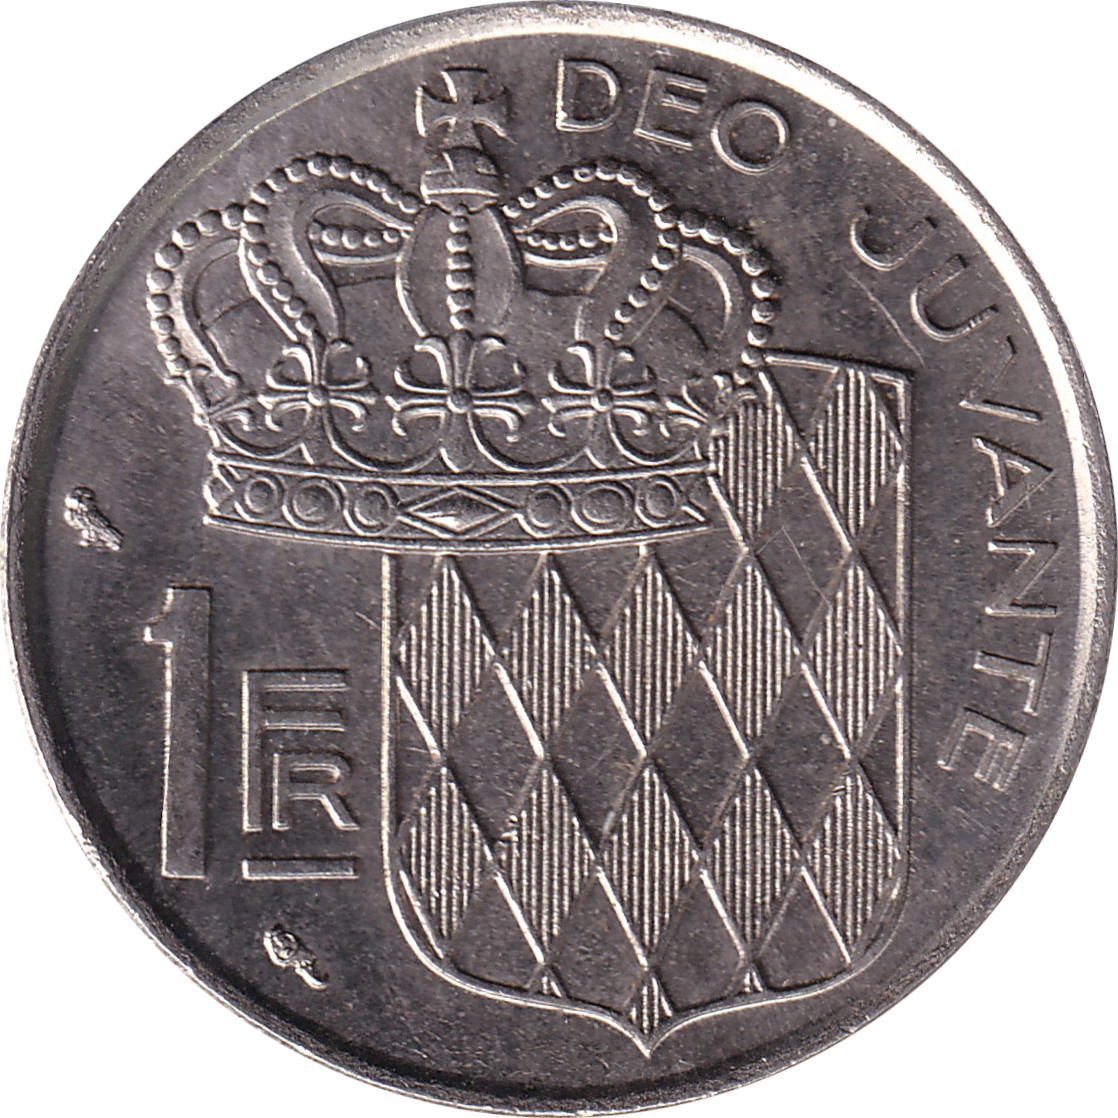 1 franc - Rainier III